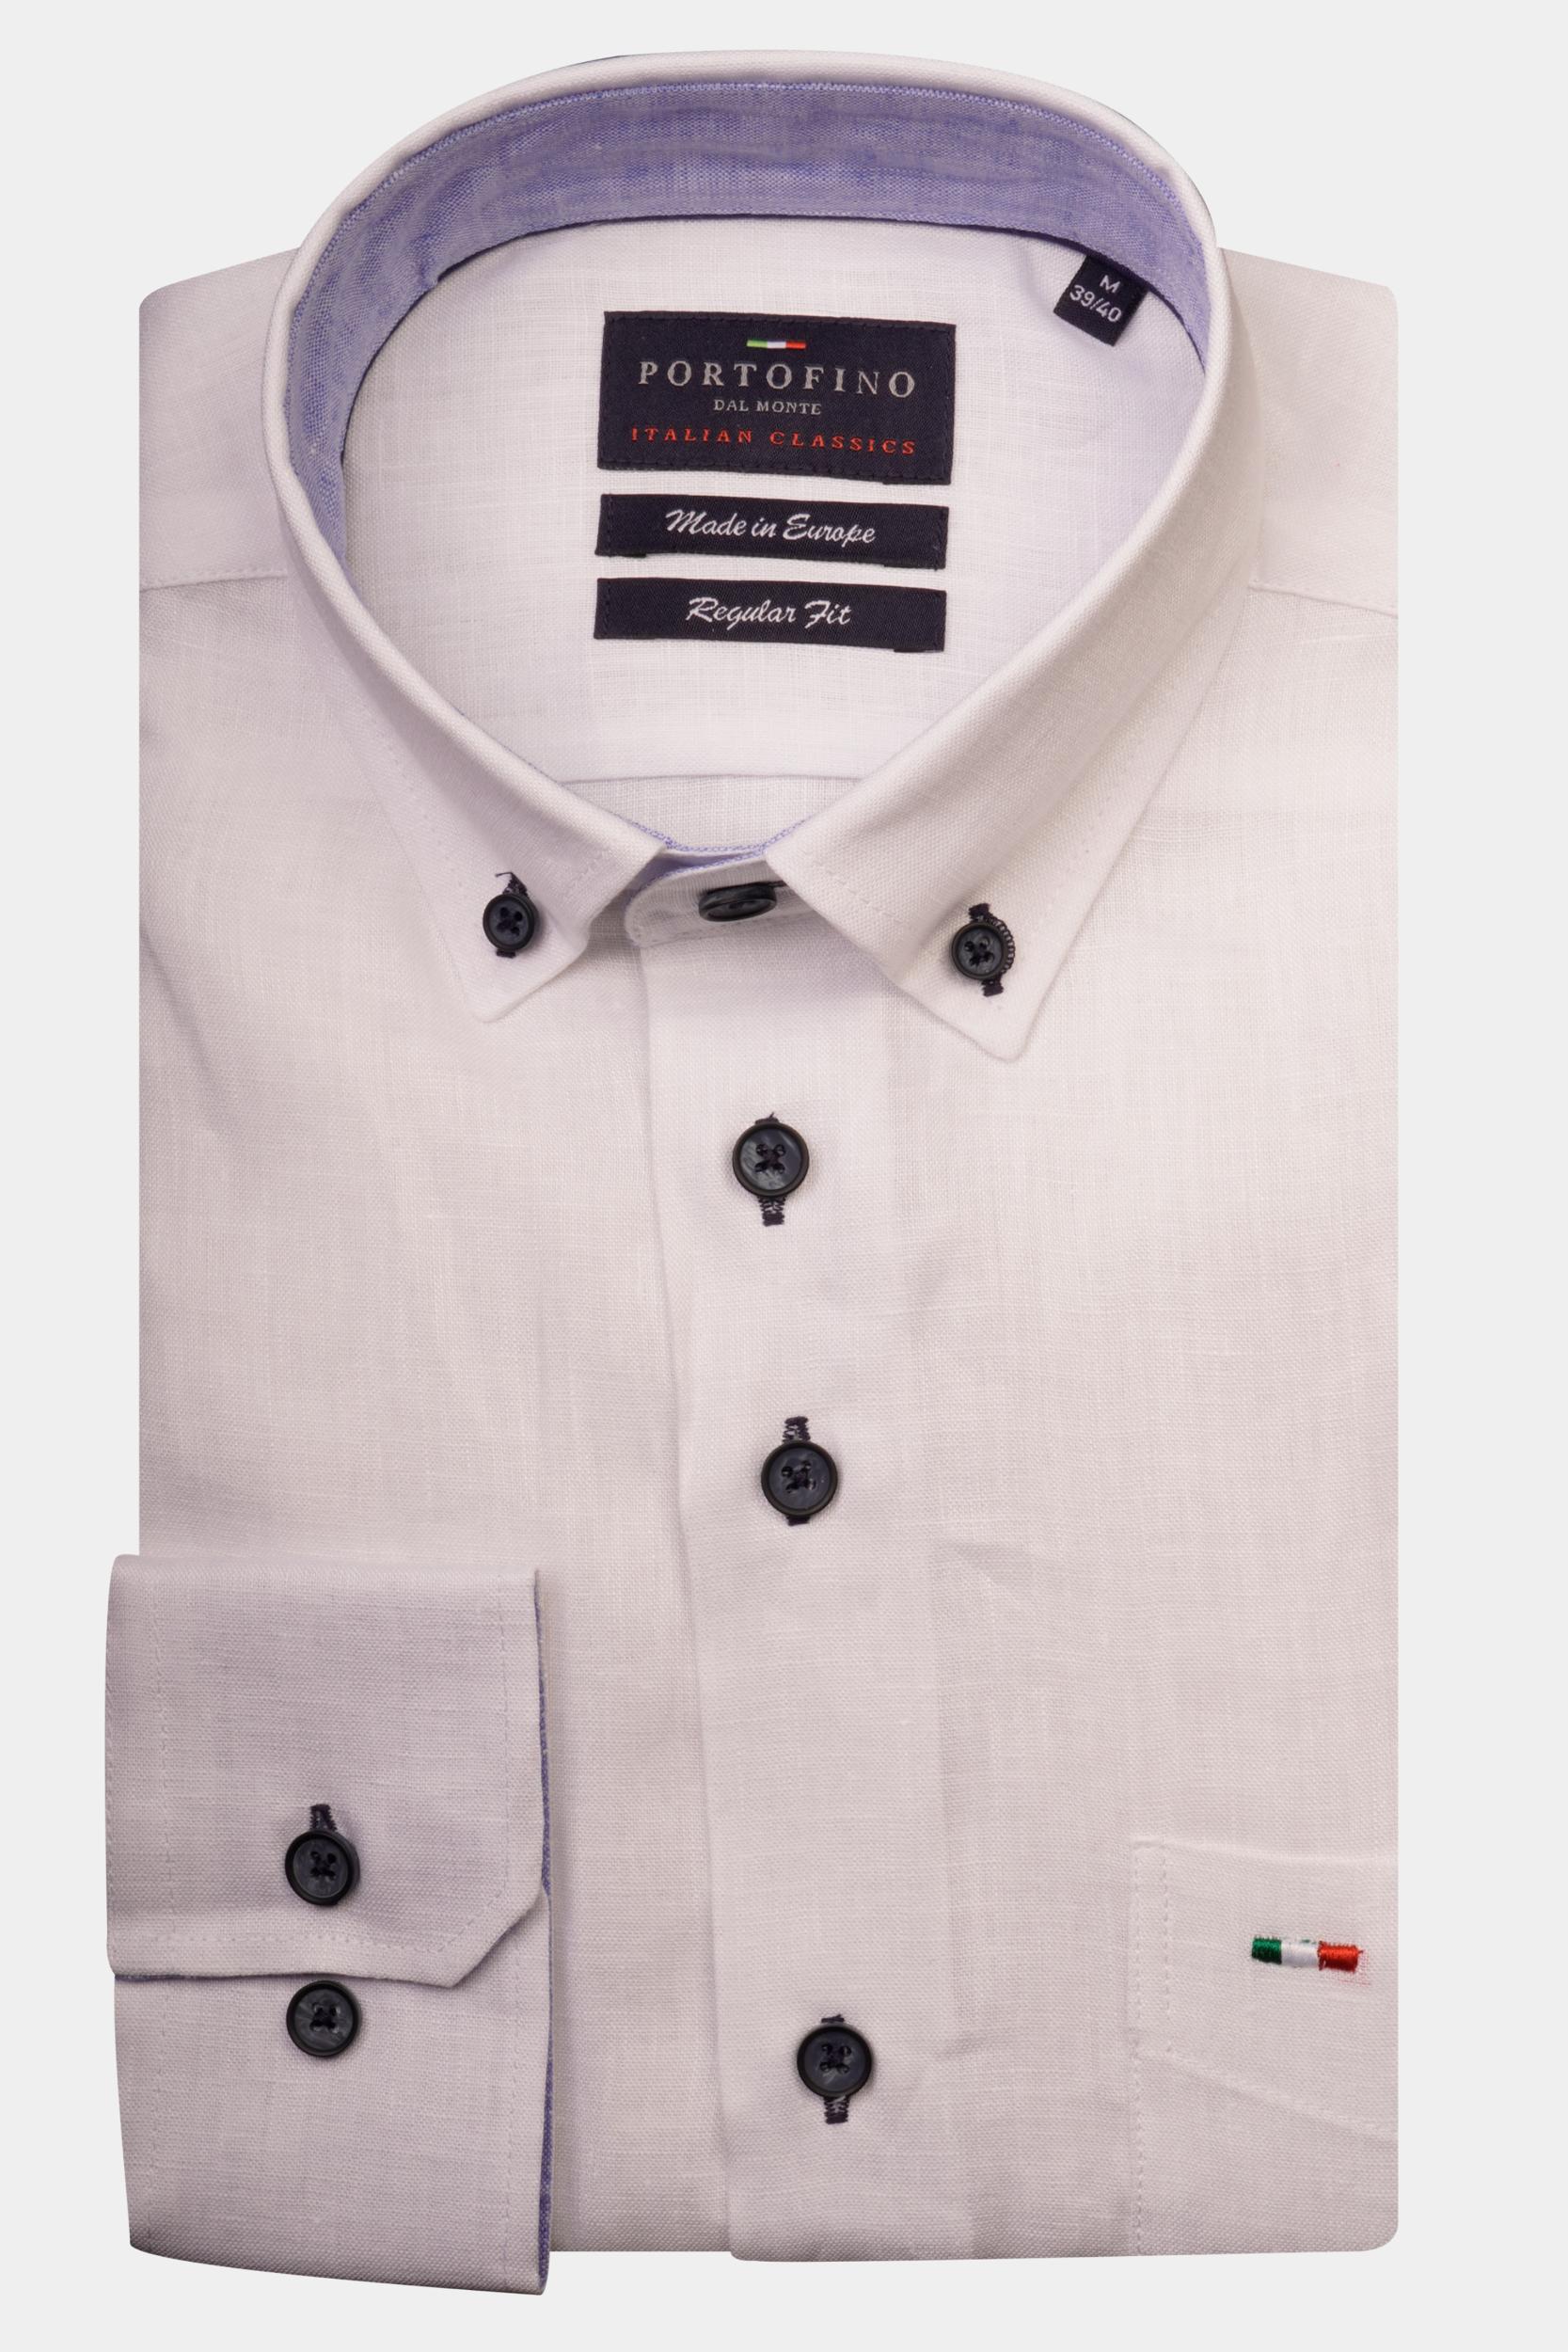 Portofino Casual hemd lange mouw Wit PF22 21796/01